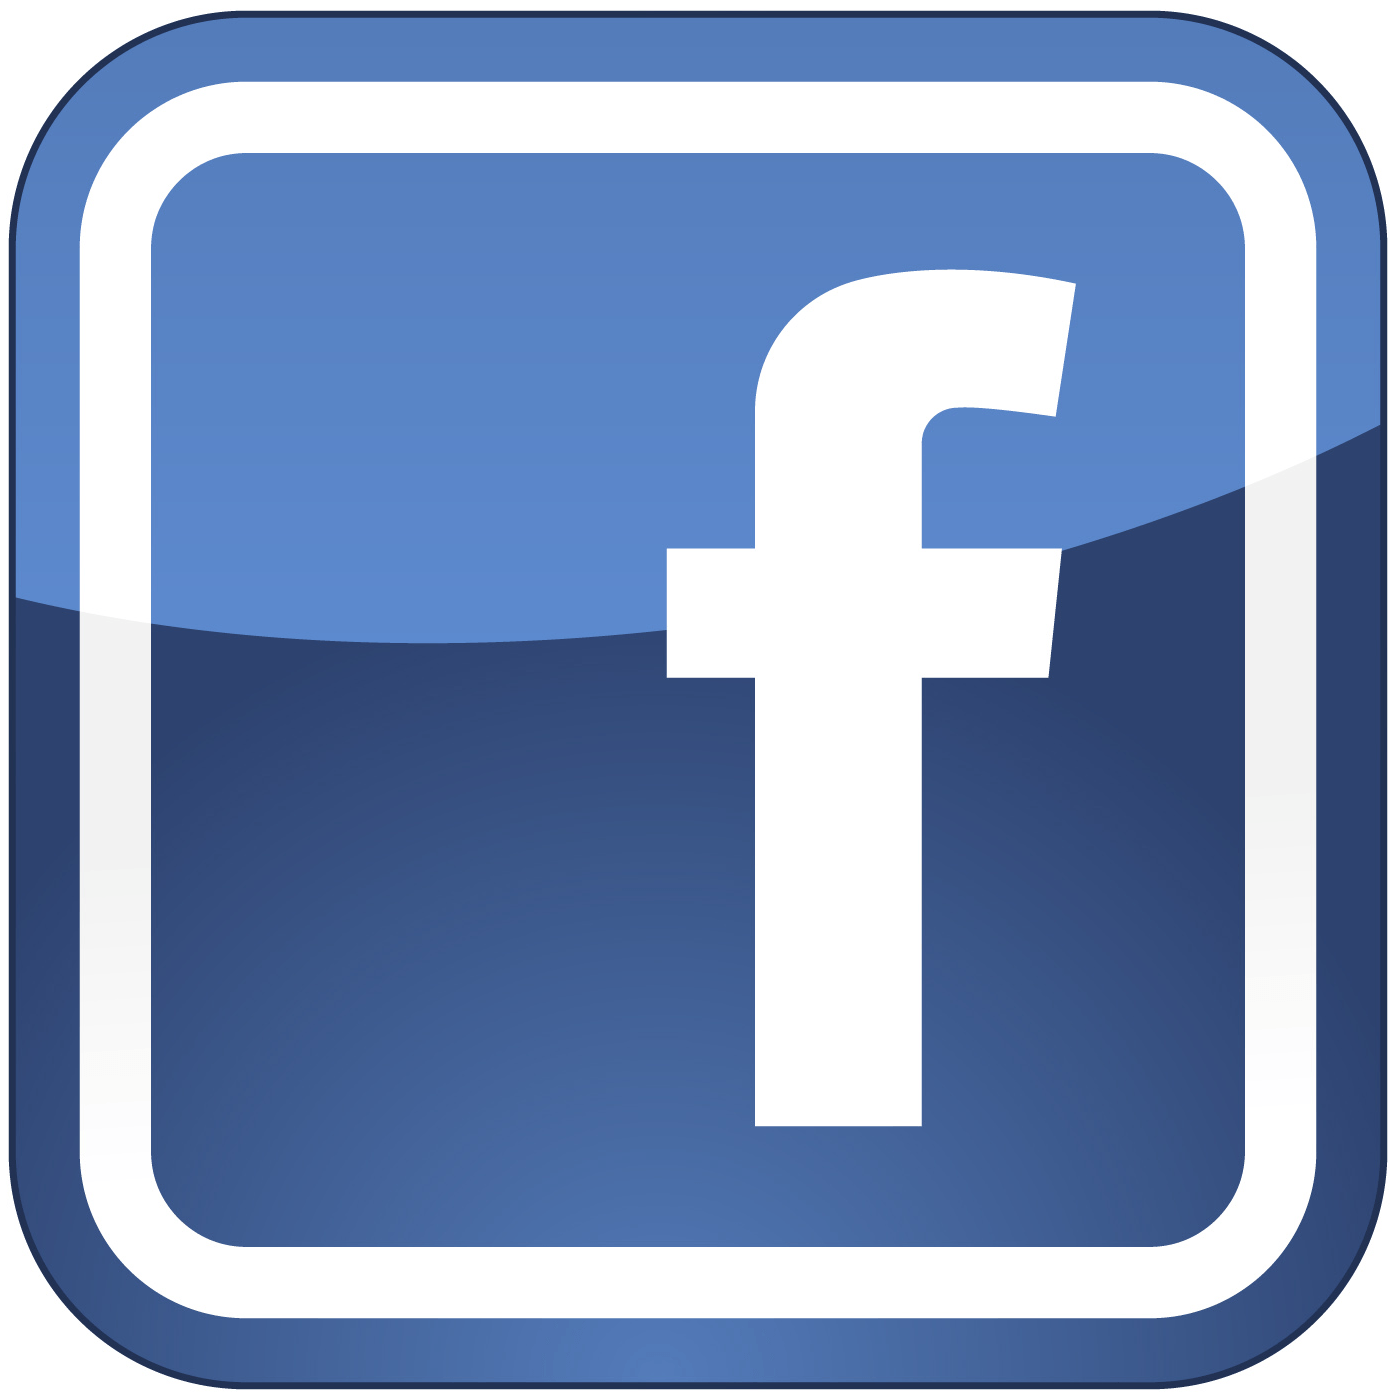 Old Facebook Logo - Facebook Logo Icon Vectorcopy Big_copy. Sherwood Park Toyota